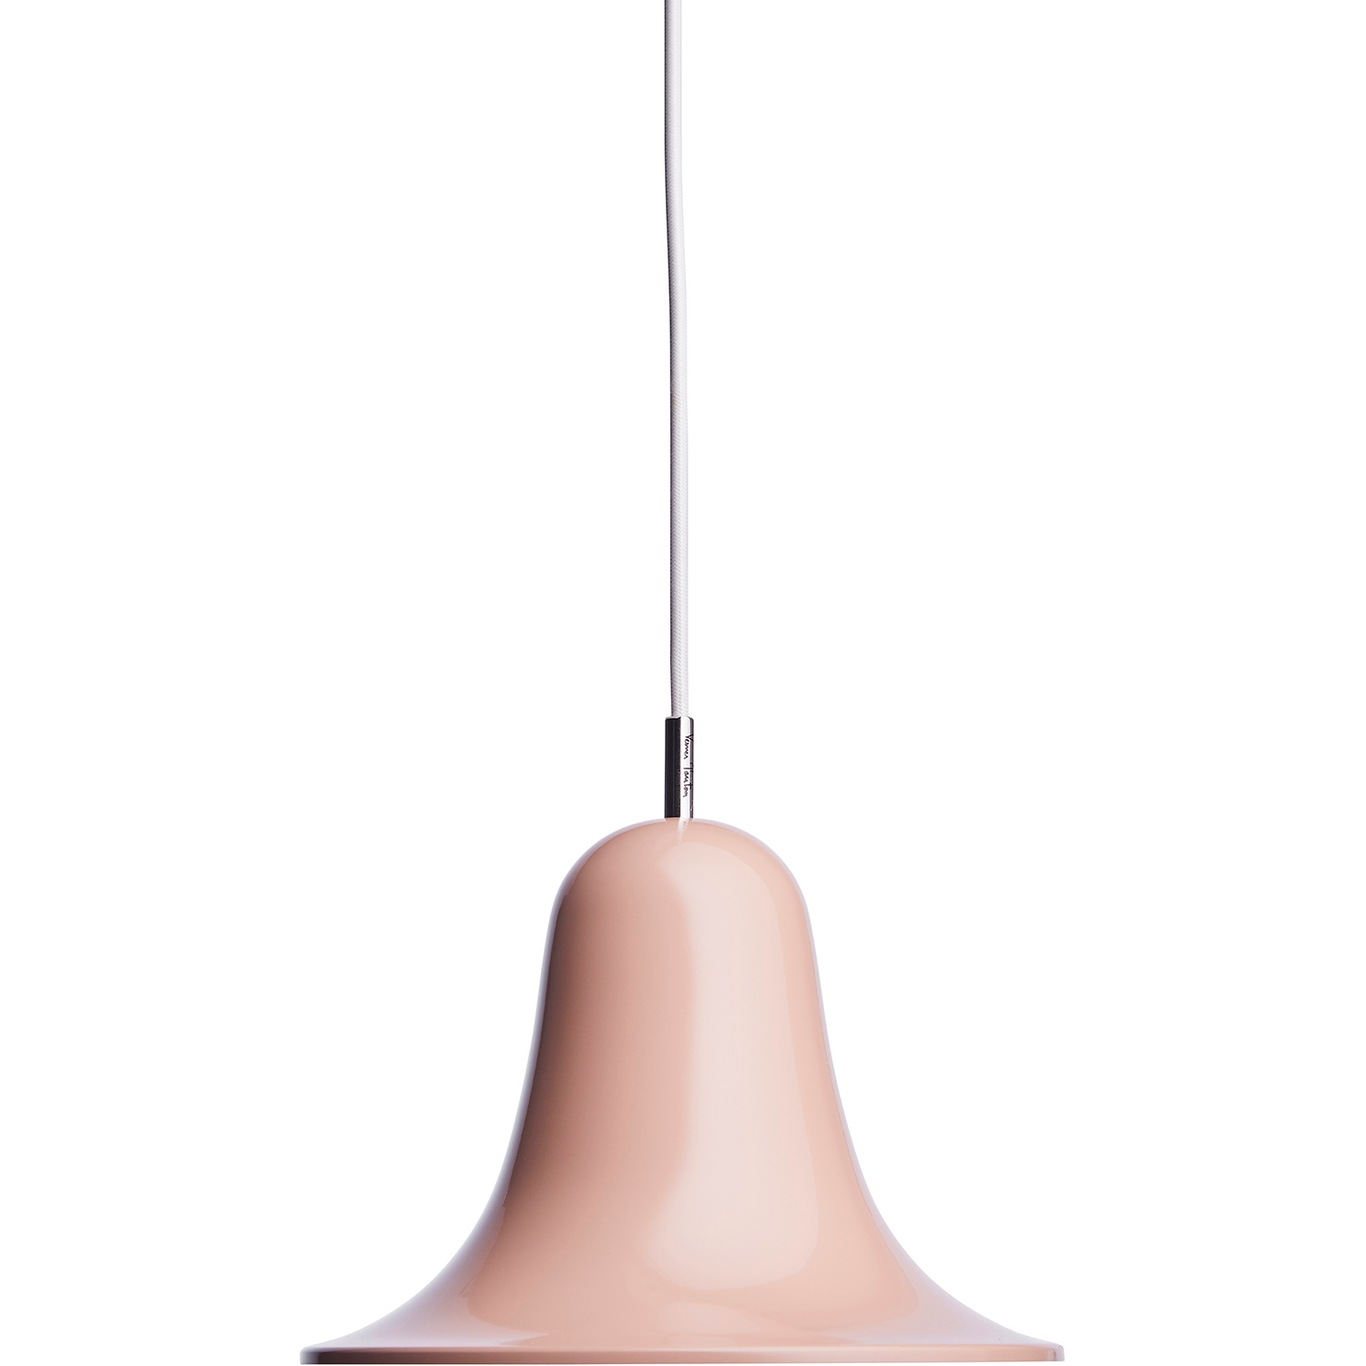 Pantop Hanglamp 23 cm, Dusty Rose